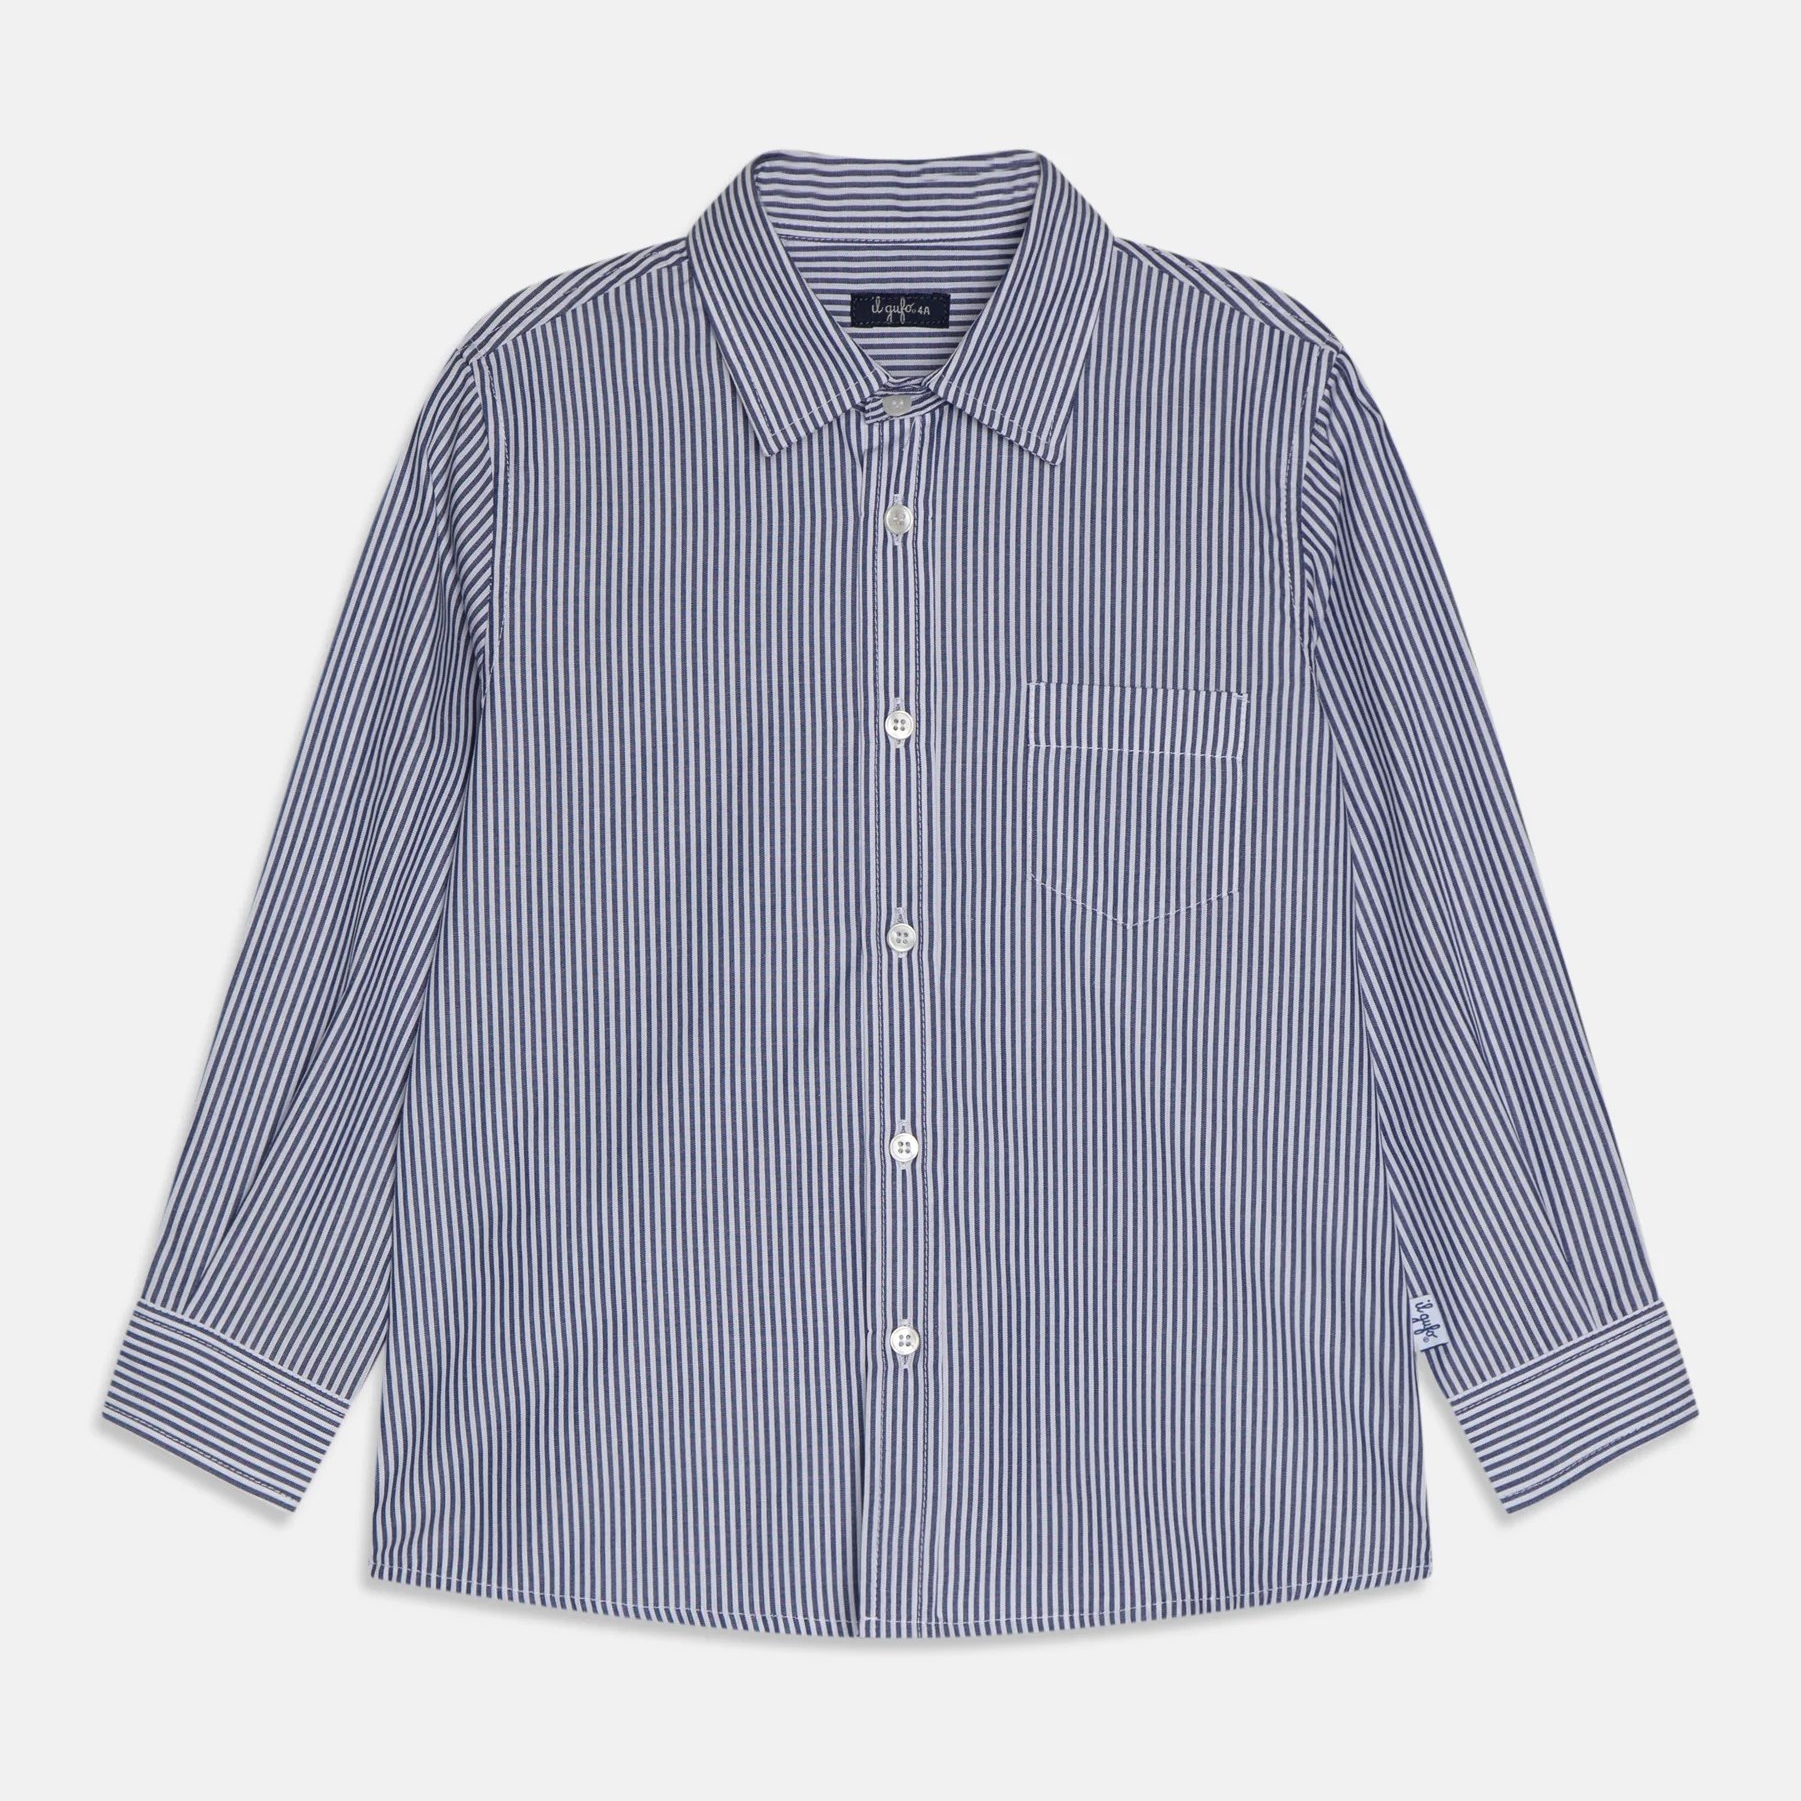 Рубашка Il Gufo Striped Kent Collar, темно-синий/белый мужская рубашка рубашка в клетку с длинным рукавом стандартного кроя southblue